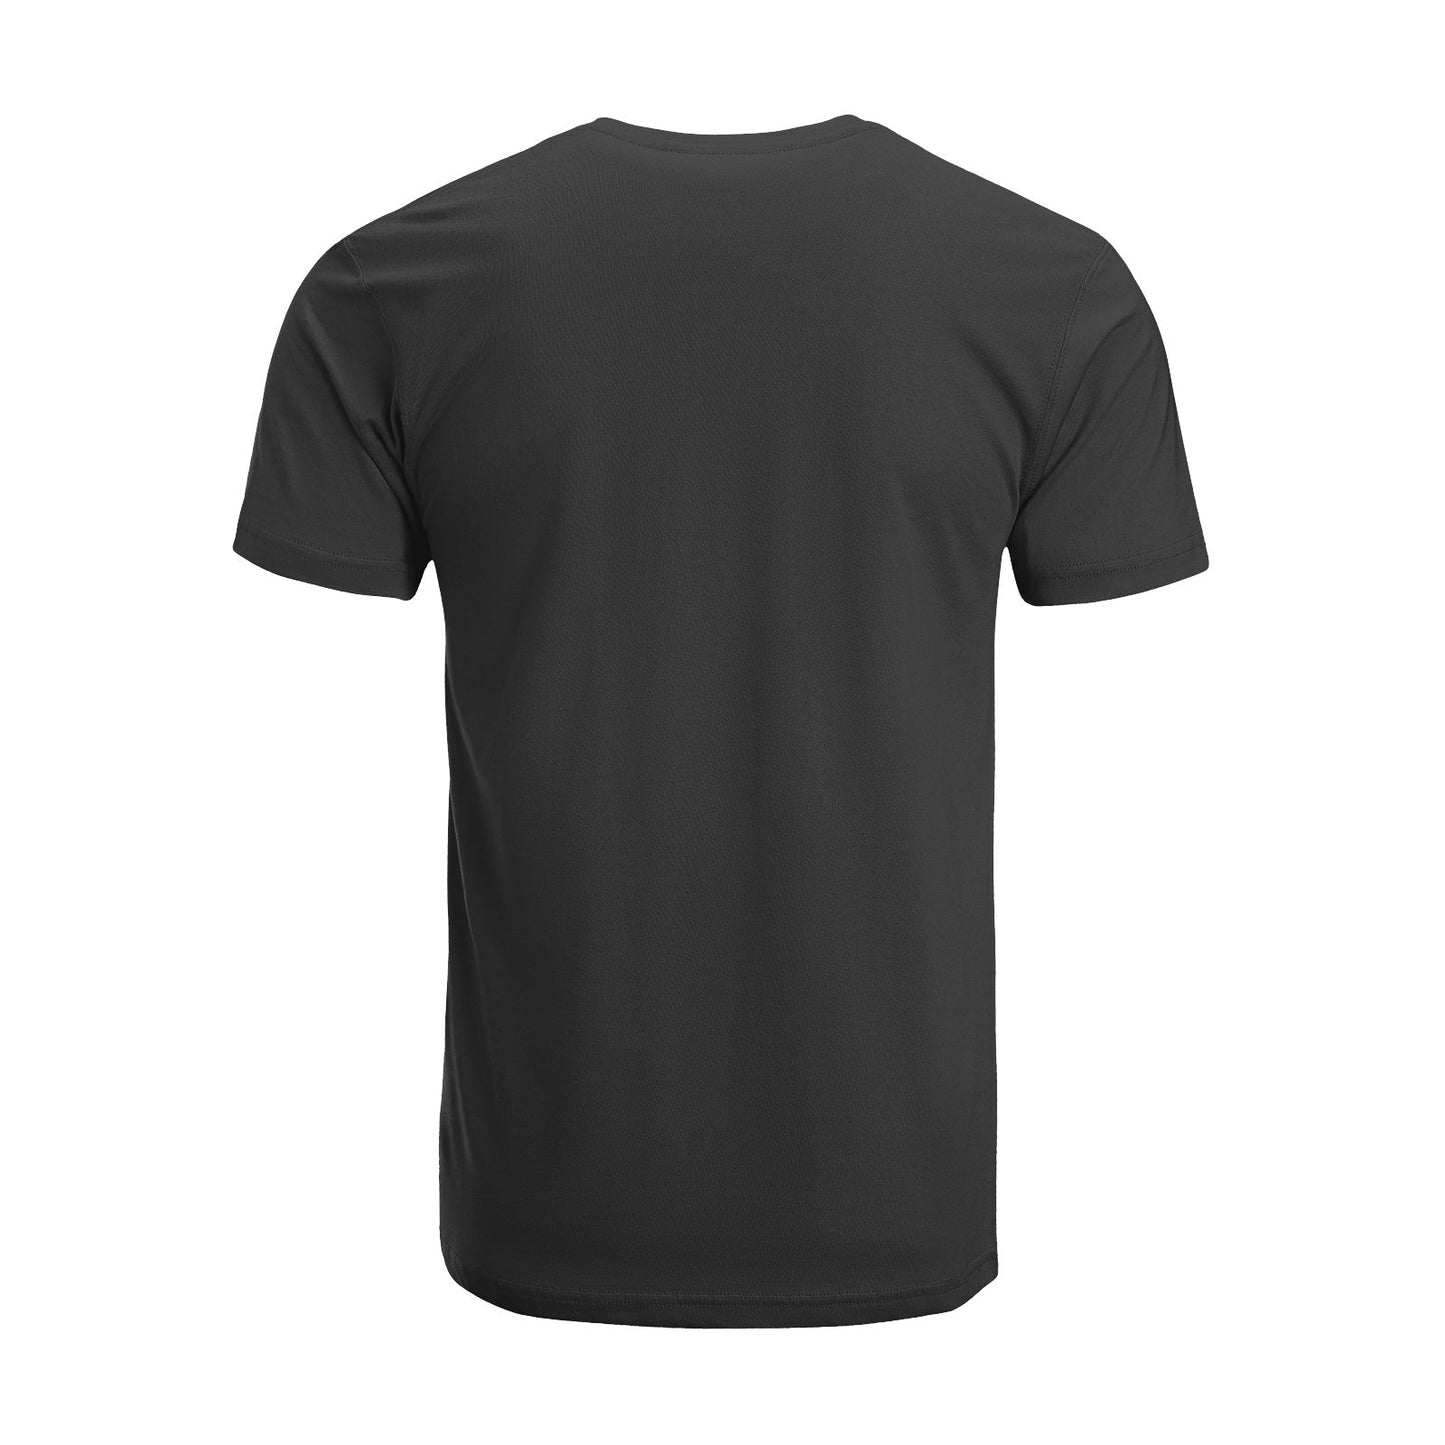 Unisex Short Sleeve Crew Neck Cotton Jersey T-Shirt CAT 43 - Tara-Outfits.com